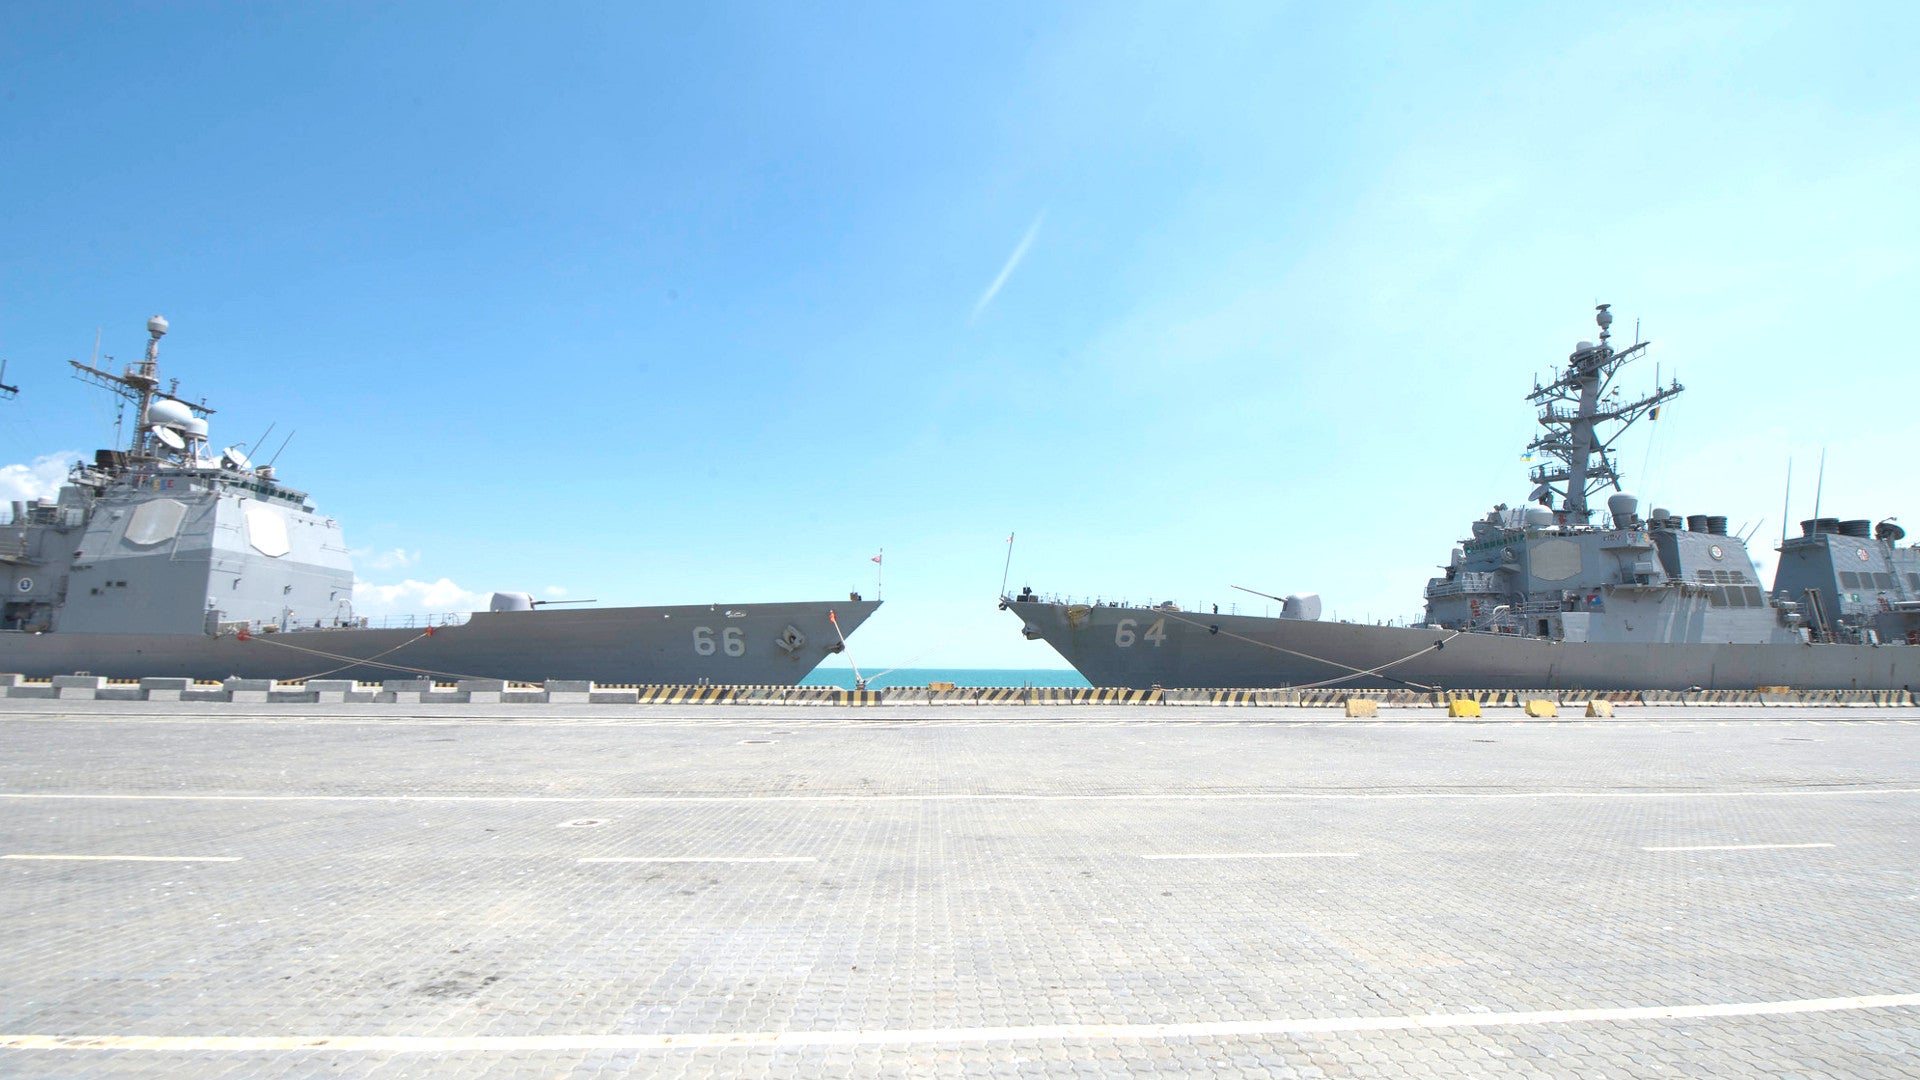 U.S. Navy Kicks Off Biggest Ever “Sea Breeze” Exercise In The Black Sea